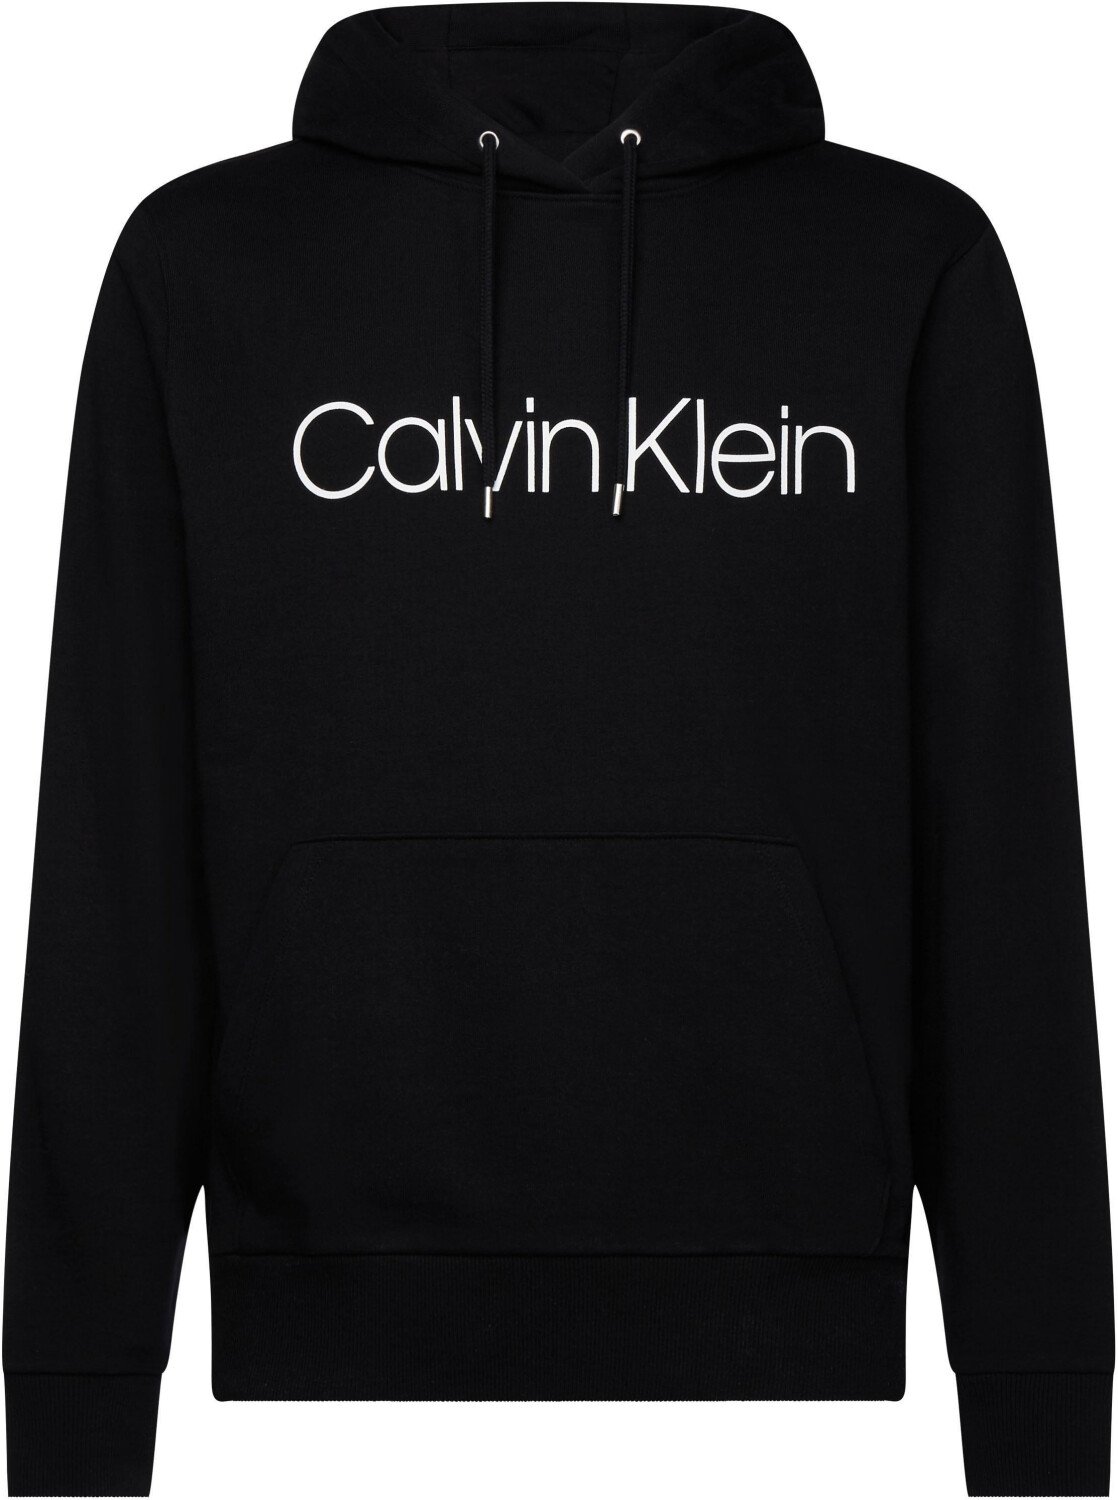 Sweatshirts  Calvin klein K10K104060 002 Calvin Black